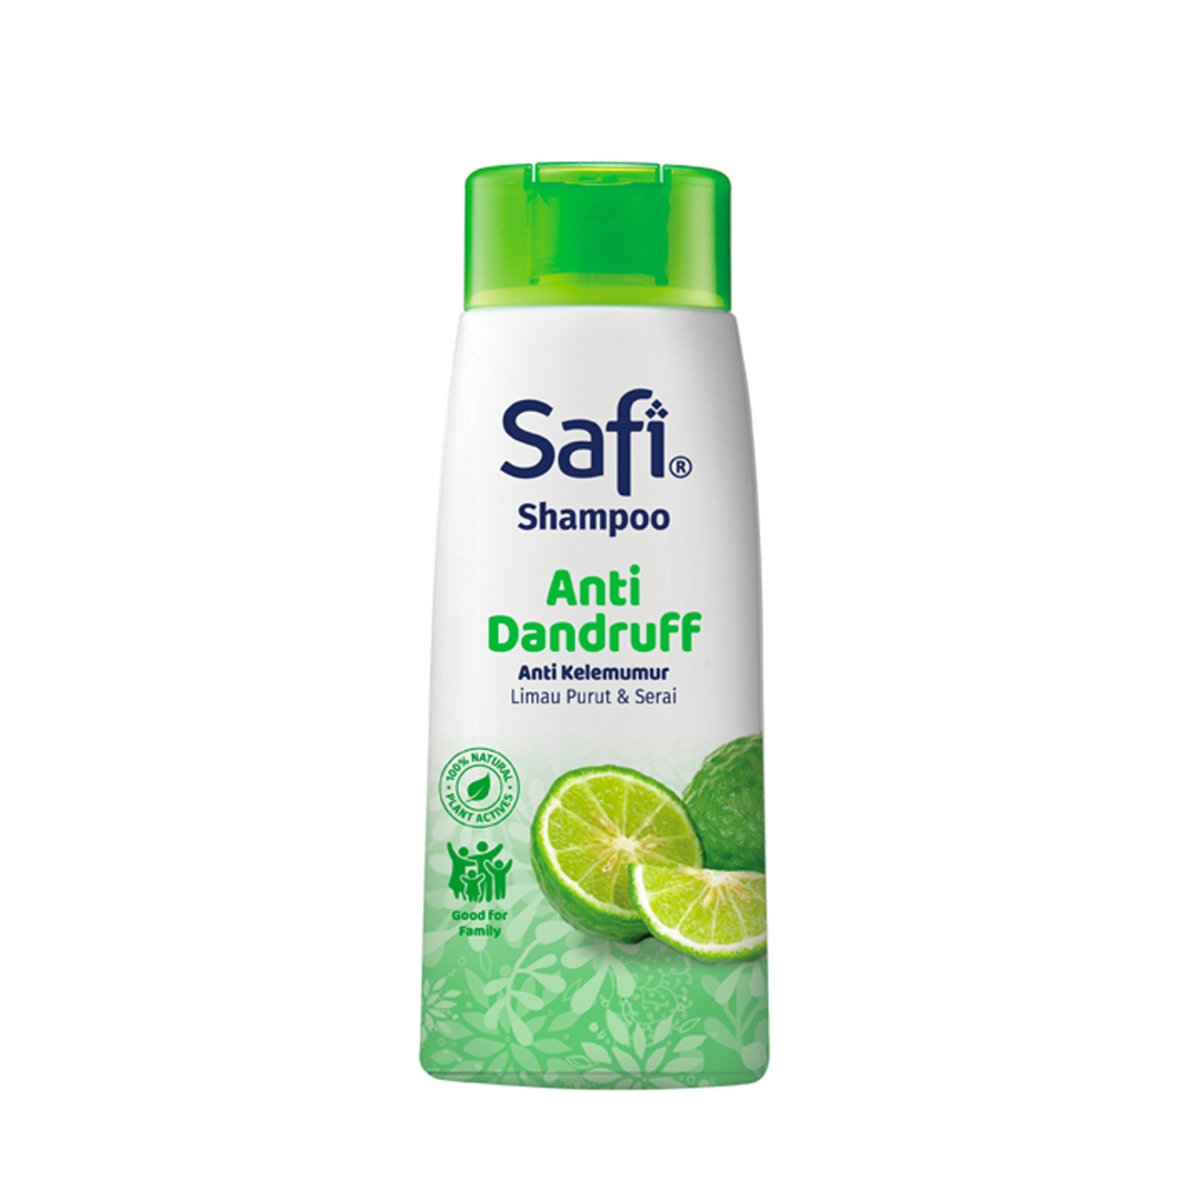 Safi Shampoo Anti Dandruff Limau Purut & Serai 2 X 360g